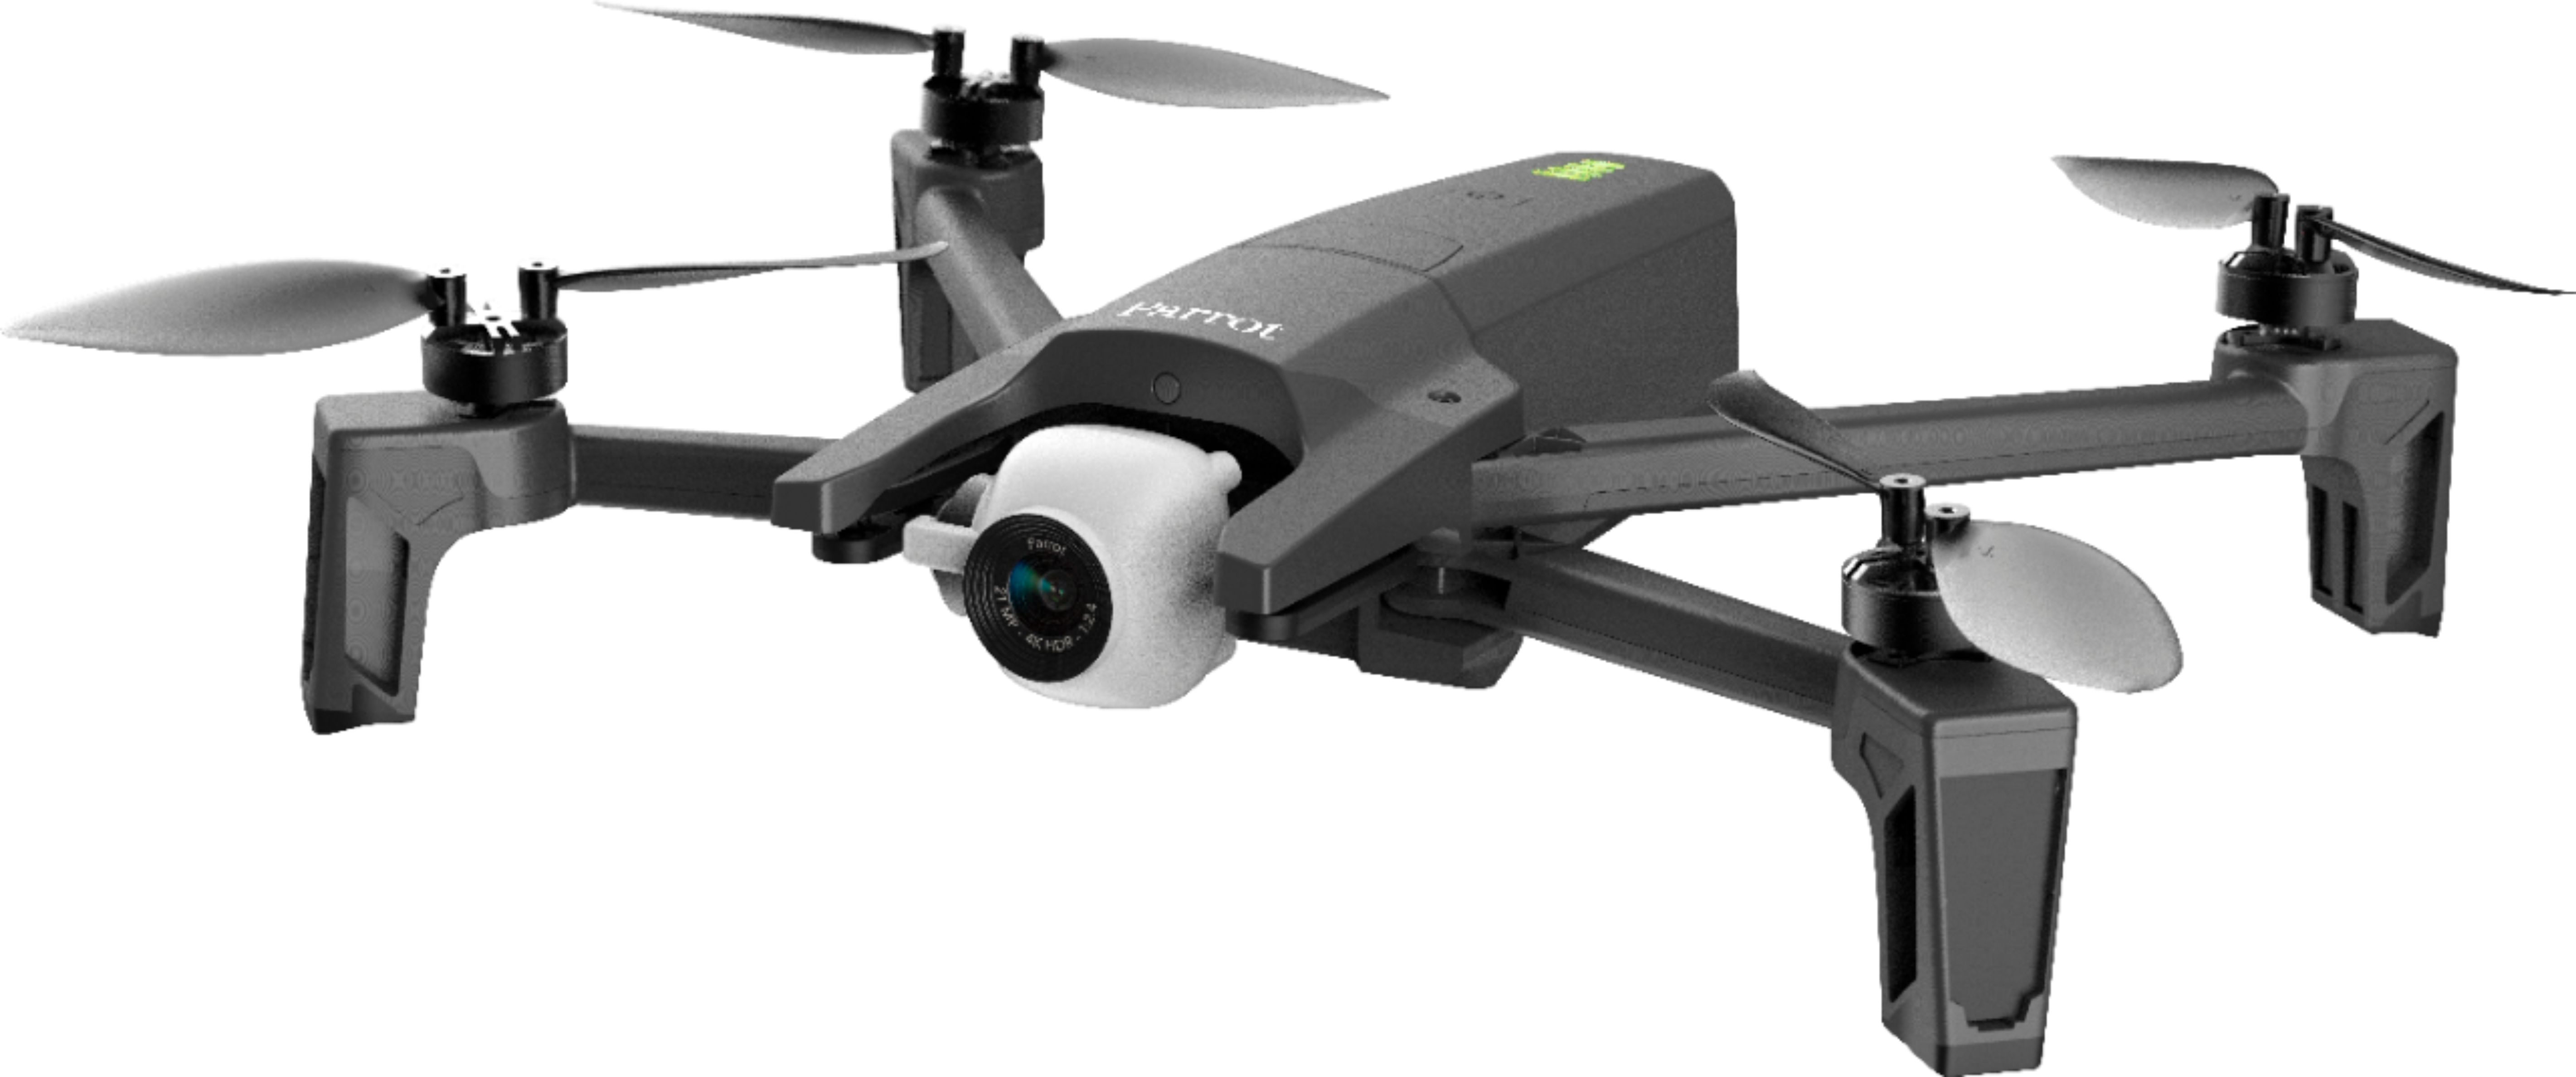 Parrot Mambo FPV Drone Black 50015BBR - Best Buy